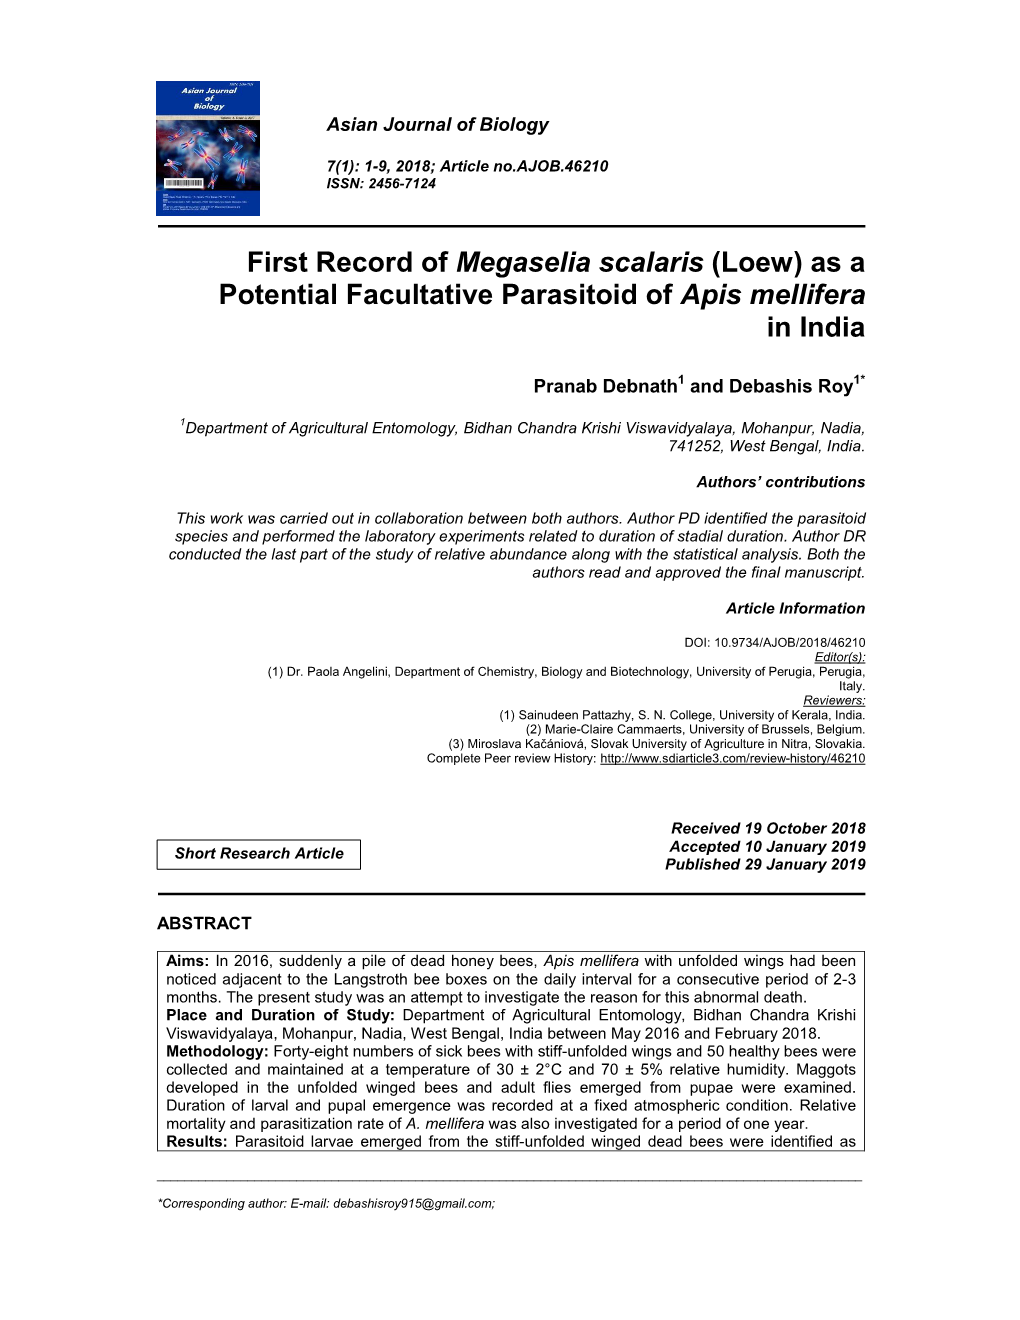 (Loew) As a Potential Facultative Parasitoid of Apis Mellifera in India